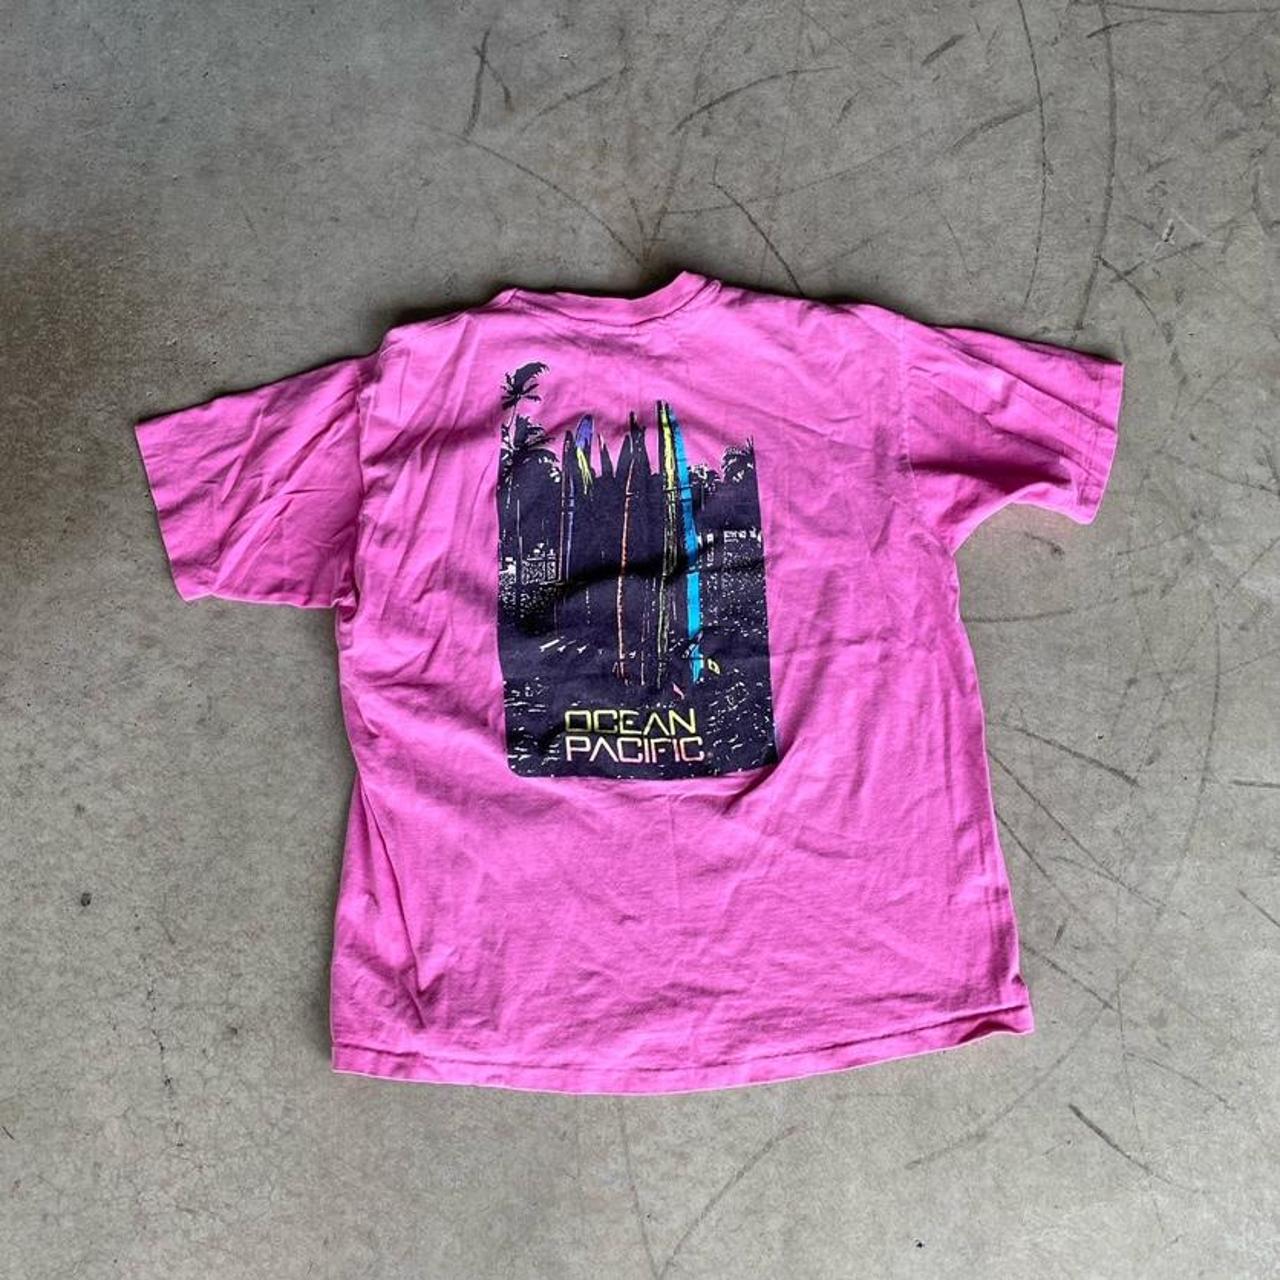 Ocean Pacific Men's Pink and Black T-shirt (3)